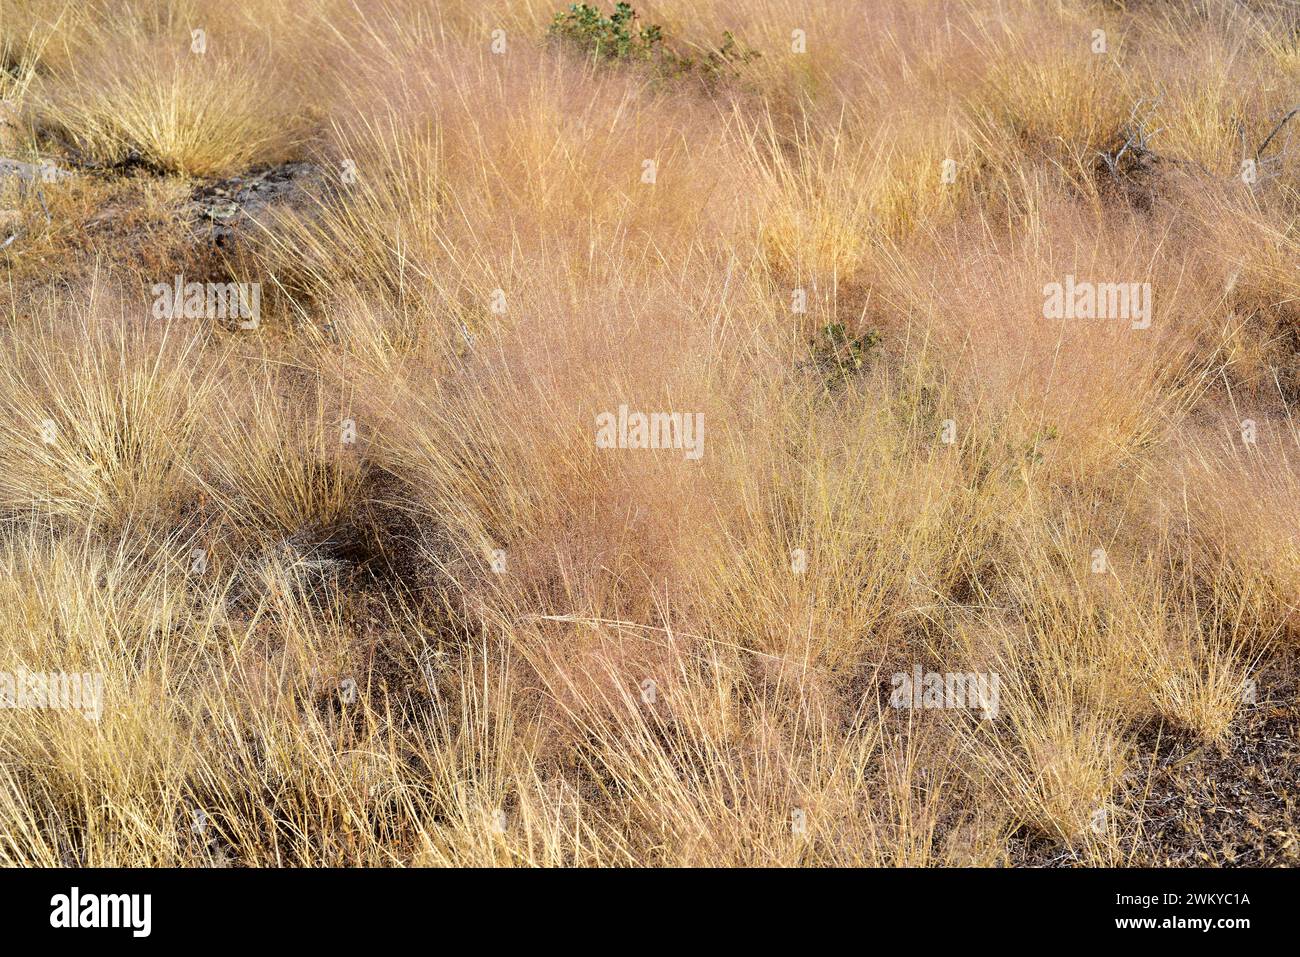 Wavy hair-grass (Deschampsia flexuosa) is a perennial herb native to Eurasia, Africa and Americas. This photo was taken in Arribes del Duero Natural P Stock Photo